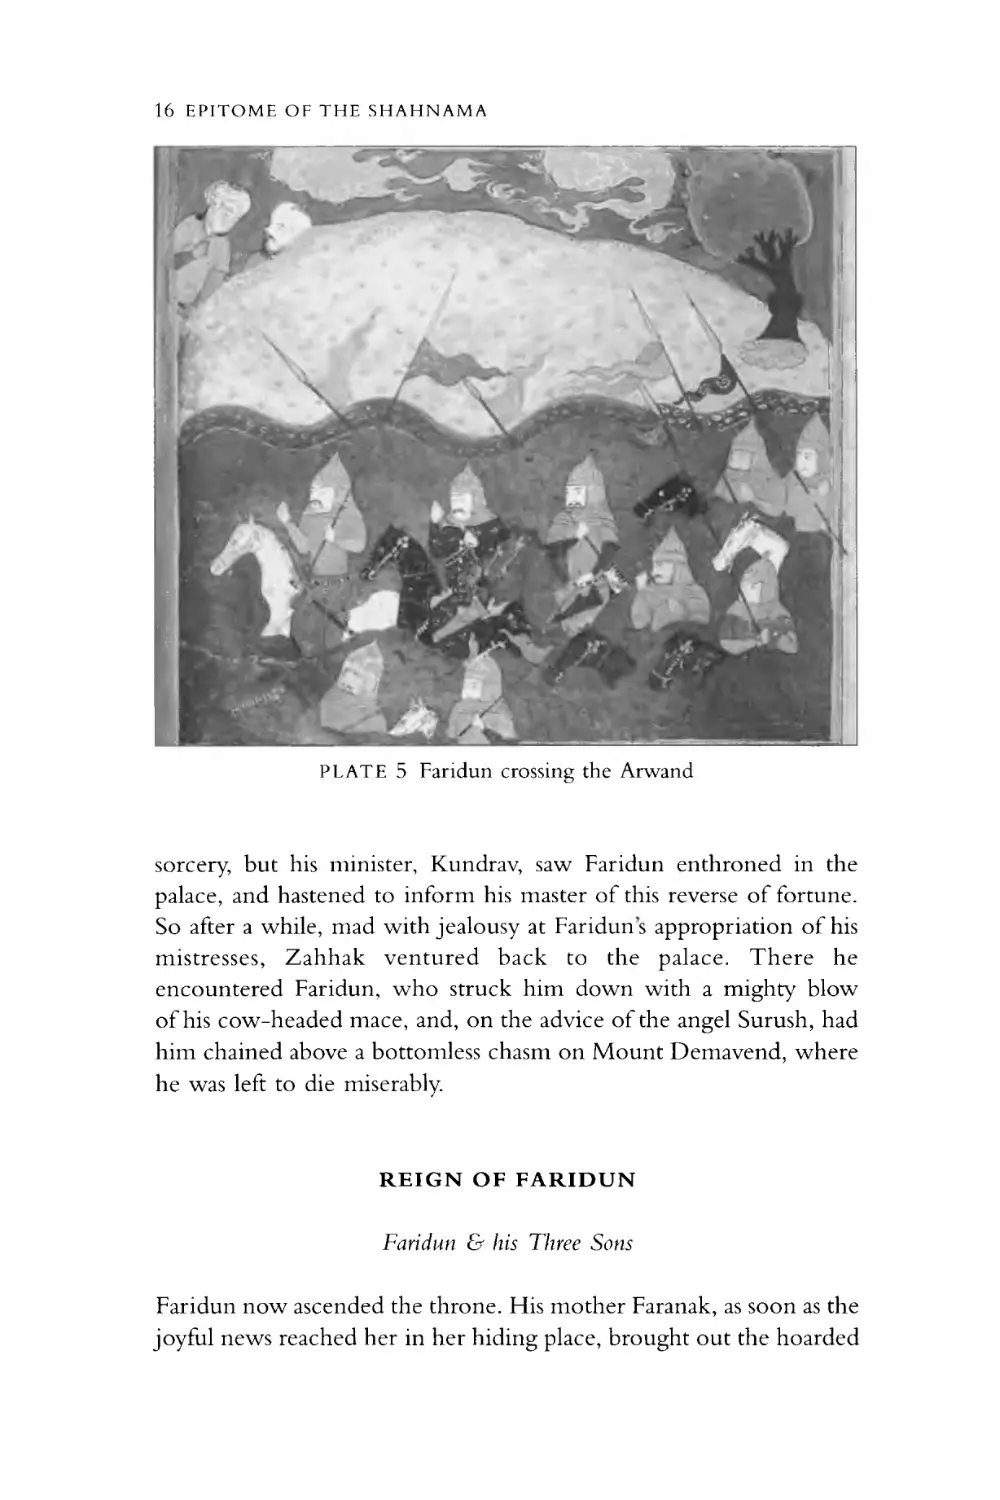 REIGN OF FARIDUN
Faridun & his Three Sons